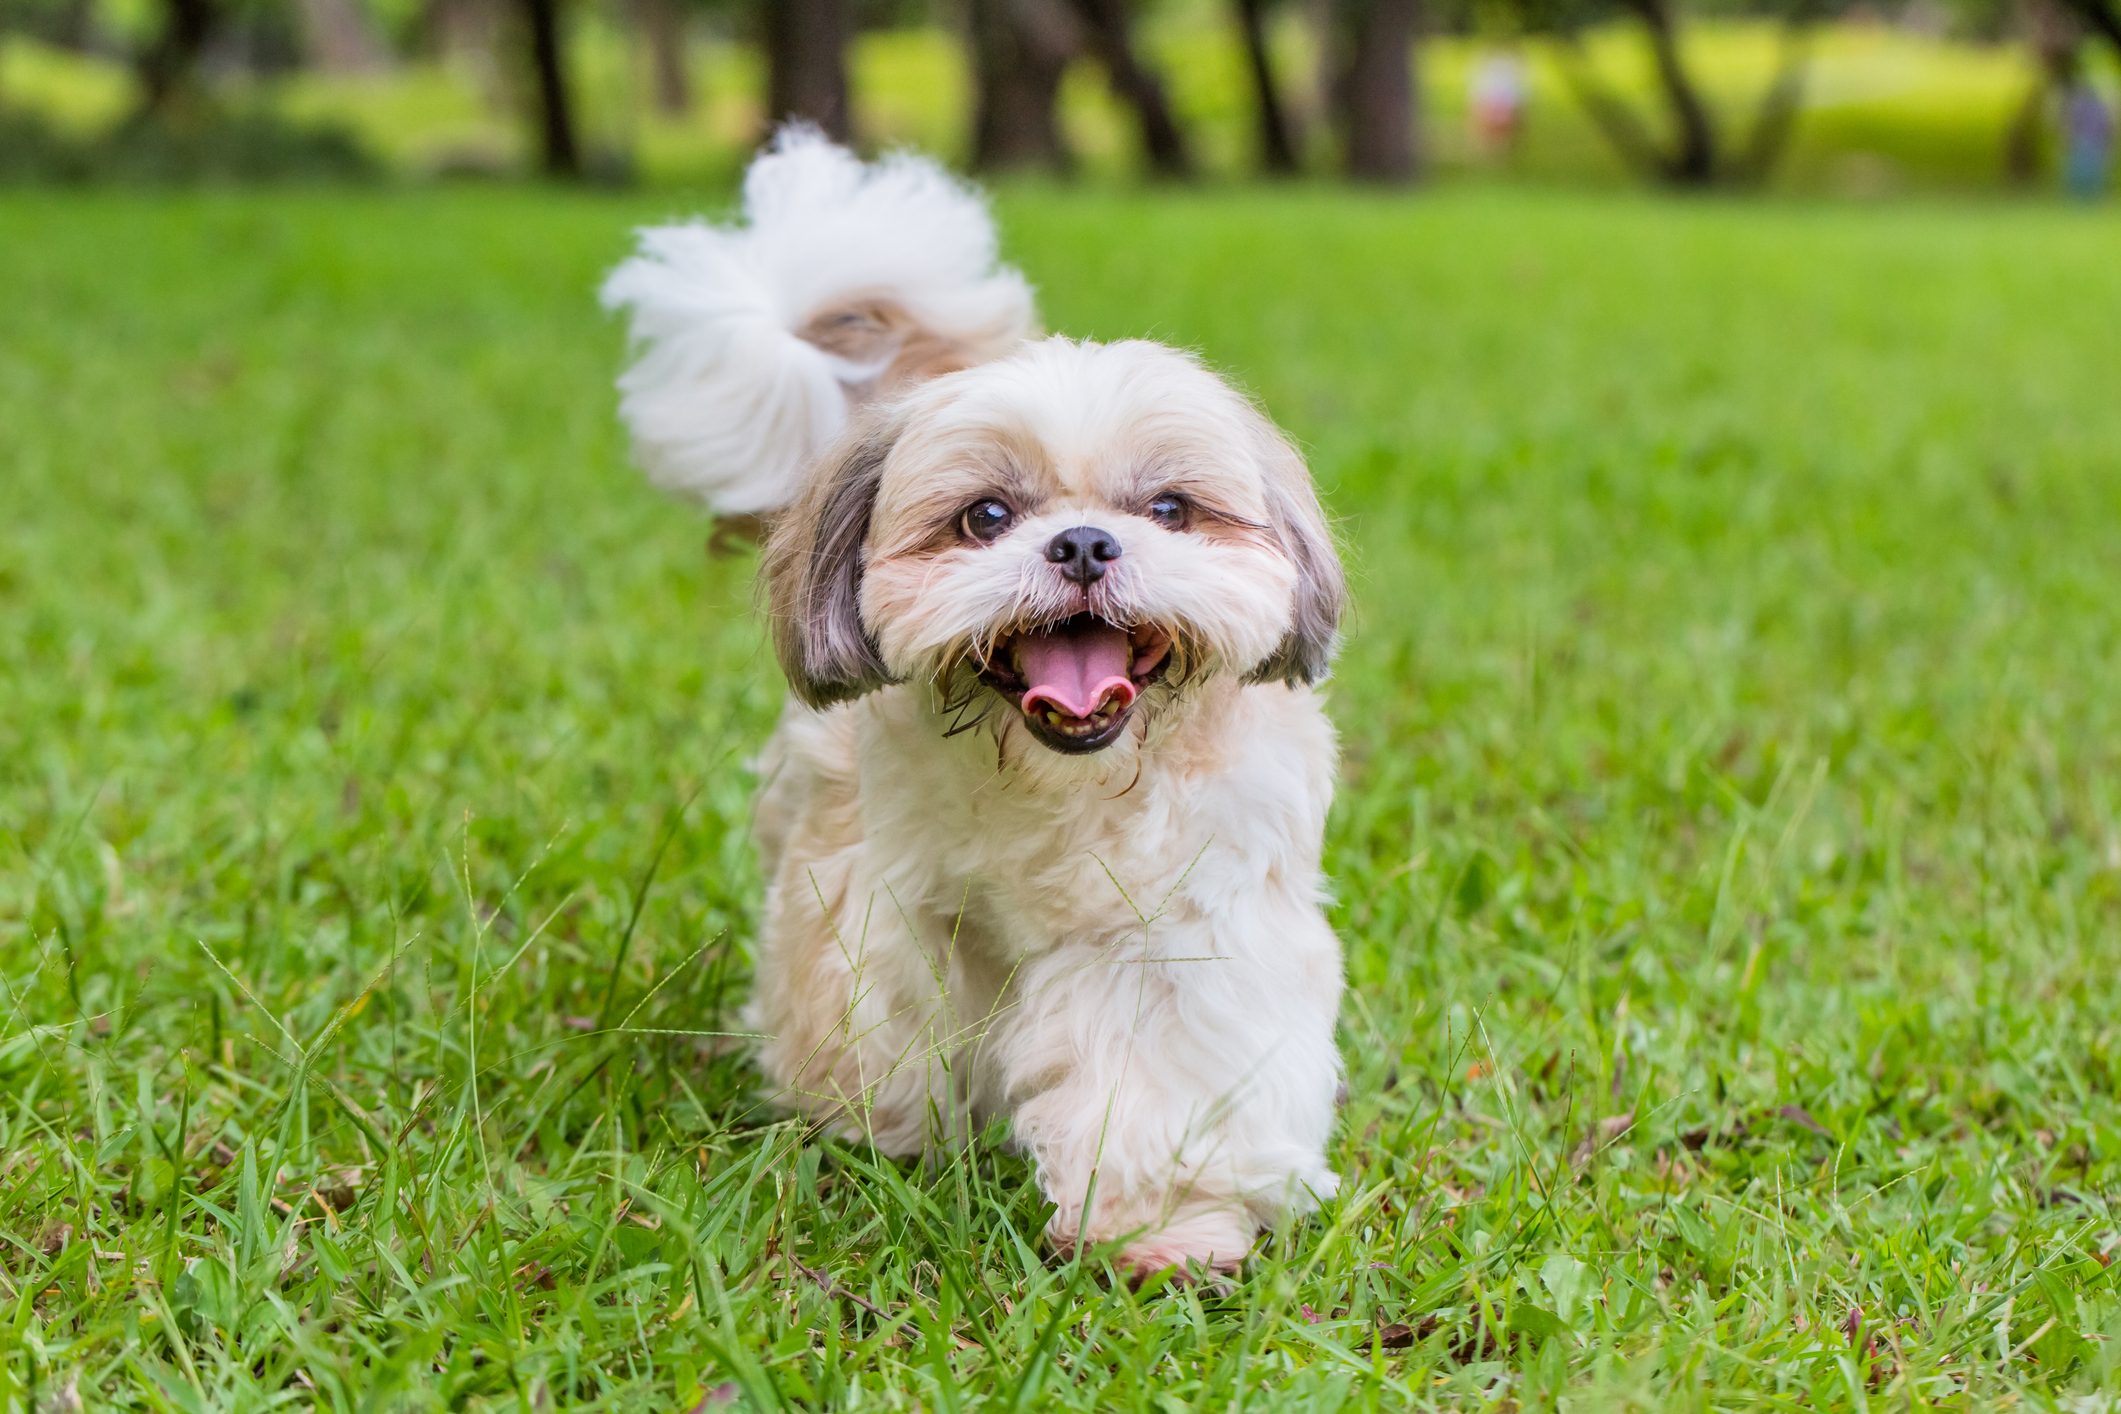 Shih Tzu dog walking on the grass